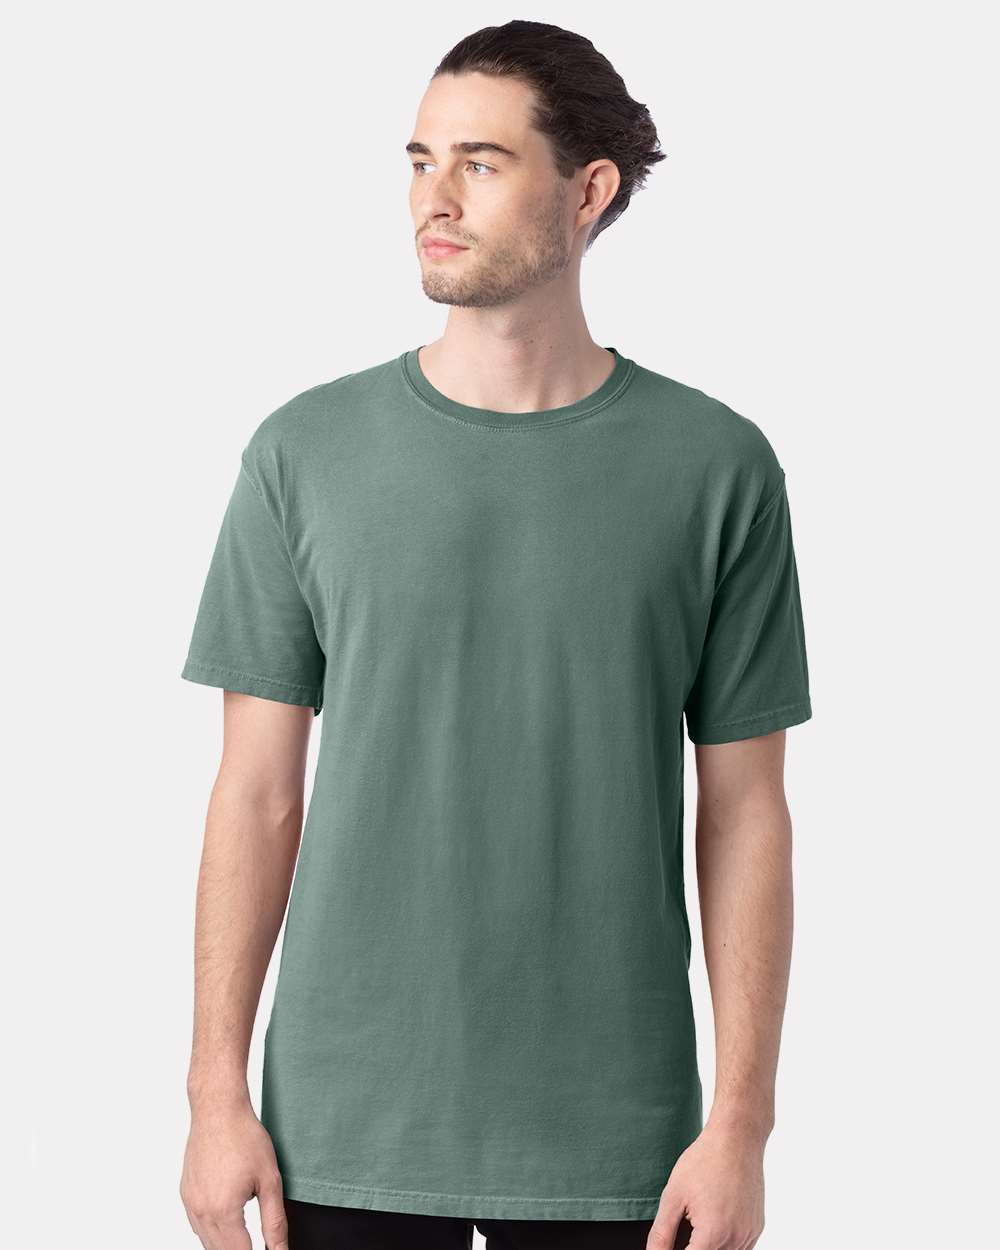 Pretreated ComfortWash GDH100 Garment-Dyed T-Shirt